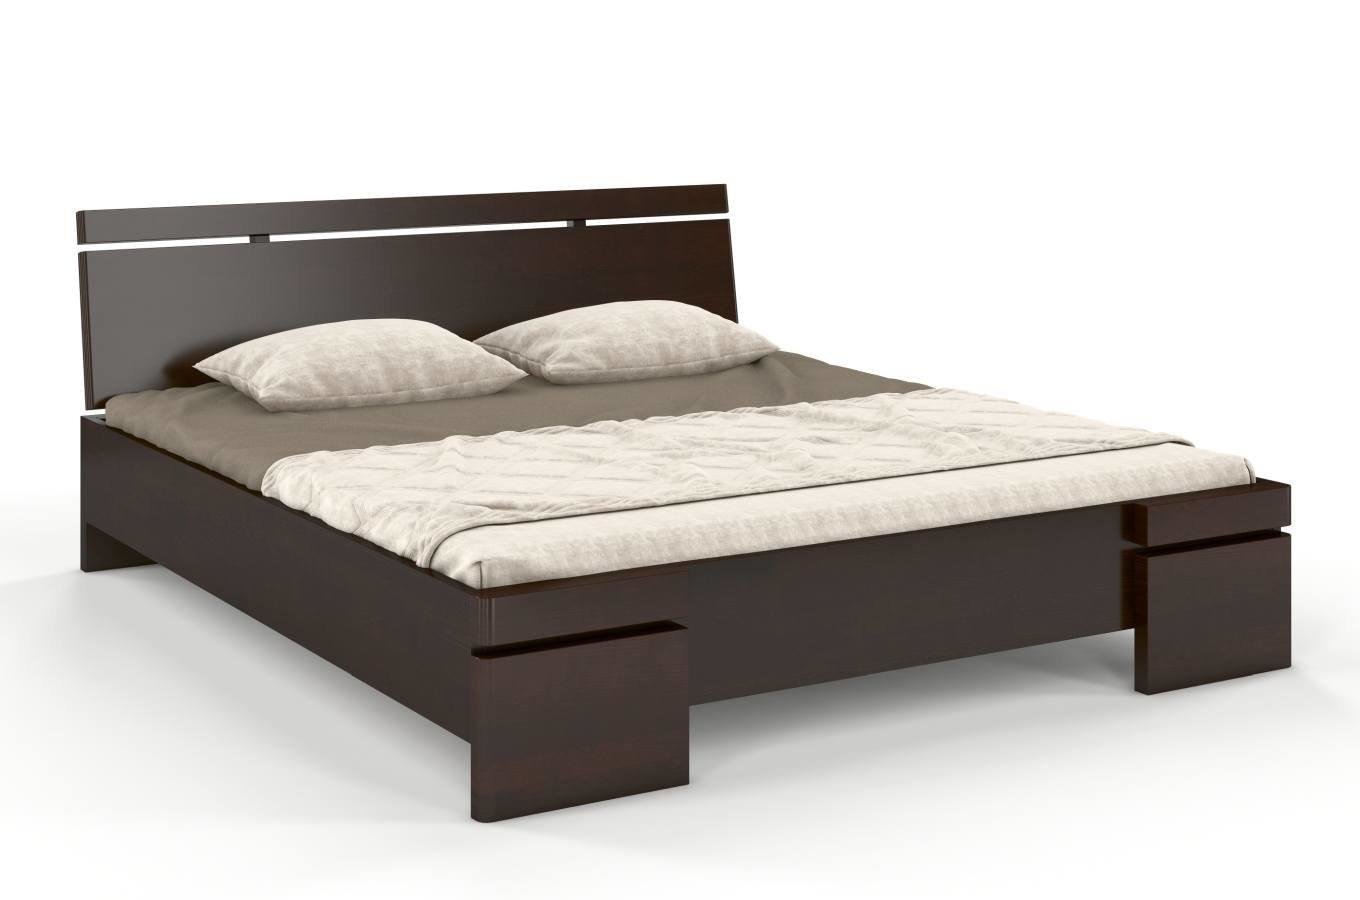 Łóżko drewniane sosnowe Skandica SPARTA Maxi & Long / 140x220 cm, kolor palisander